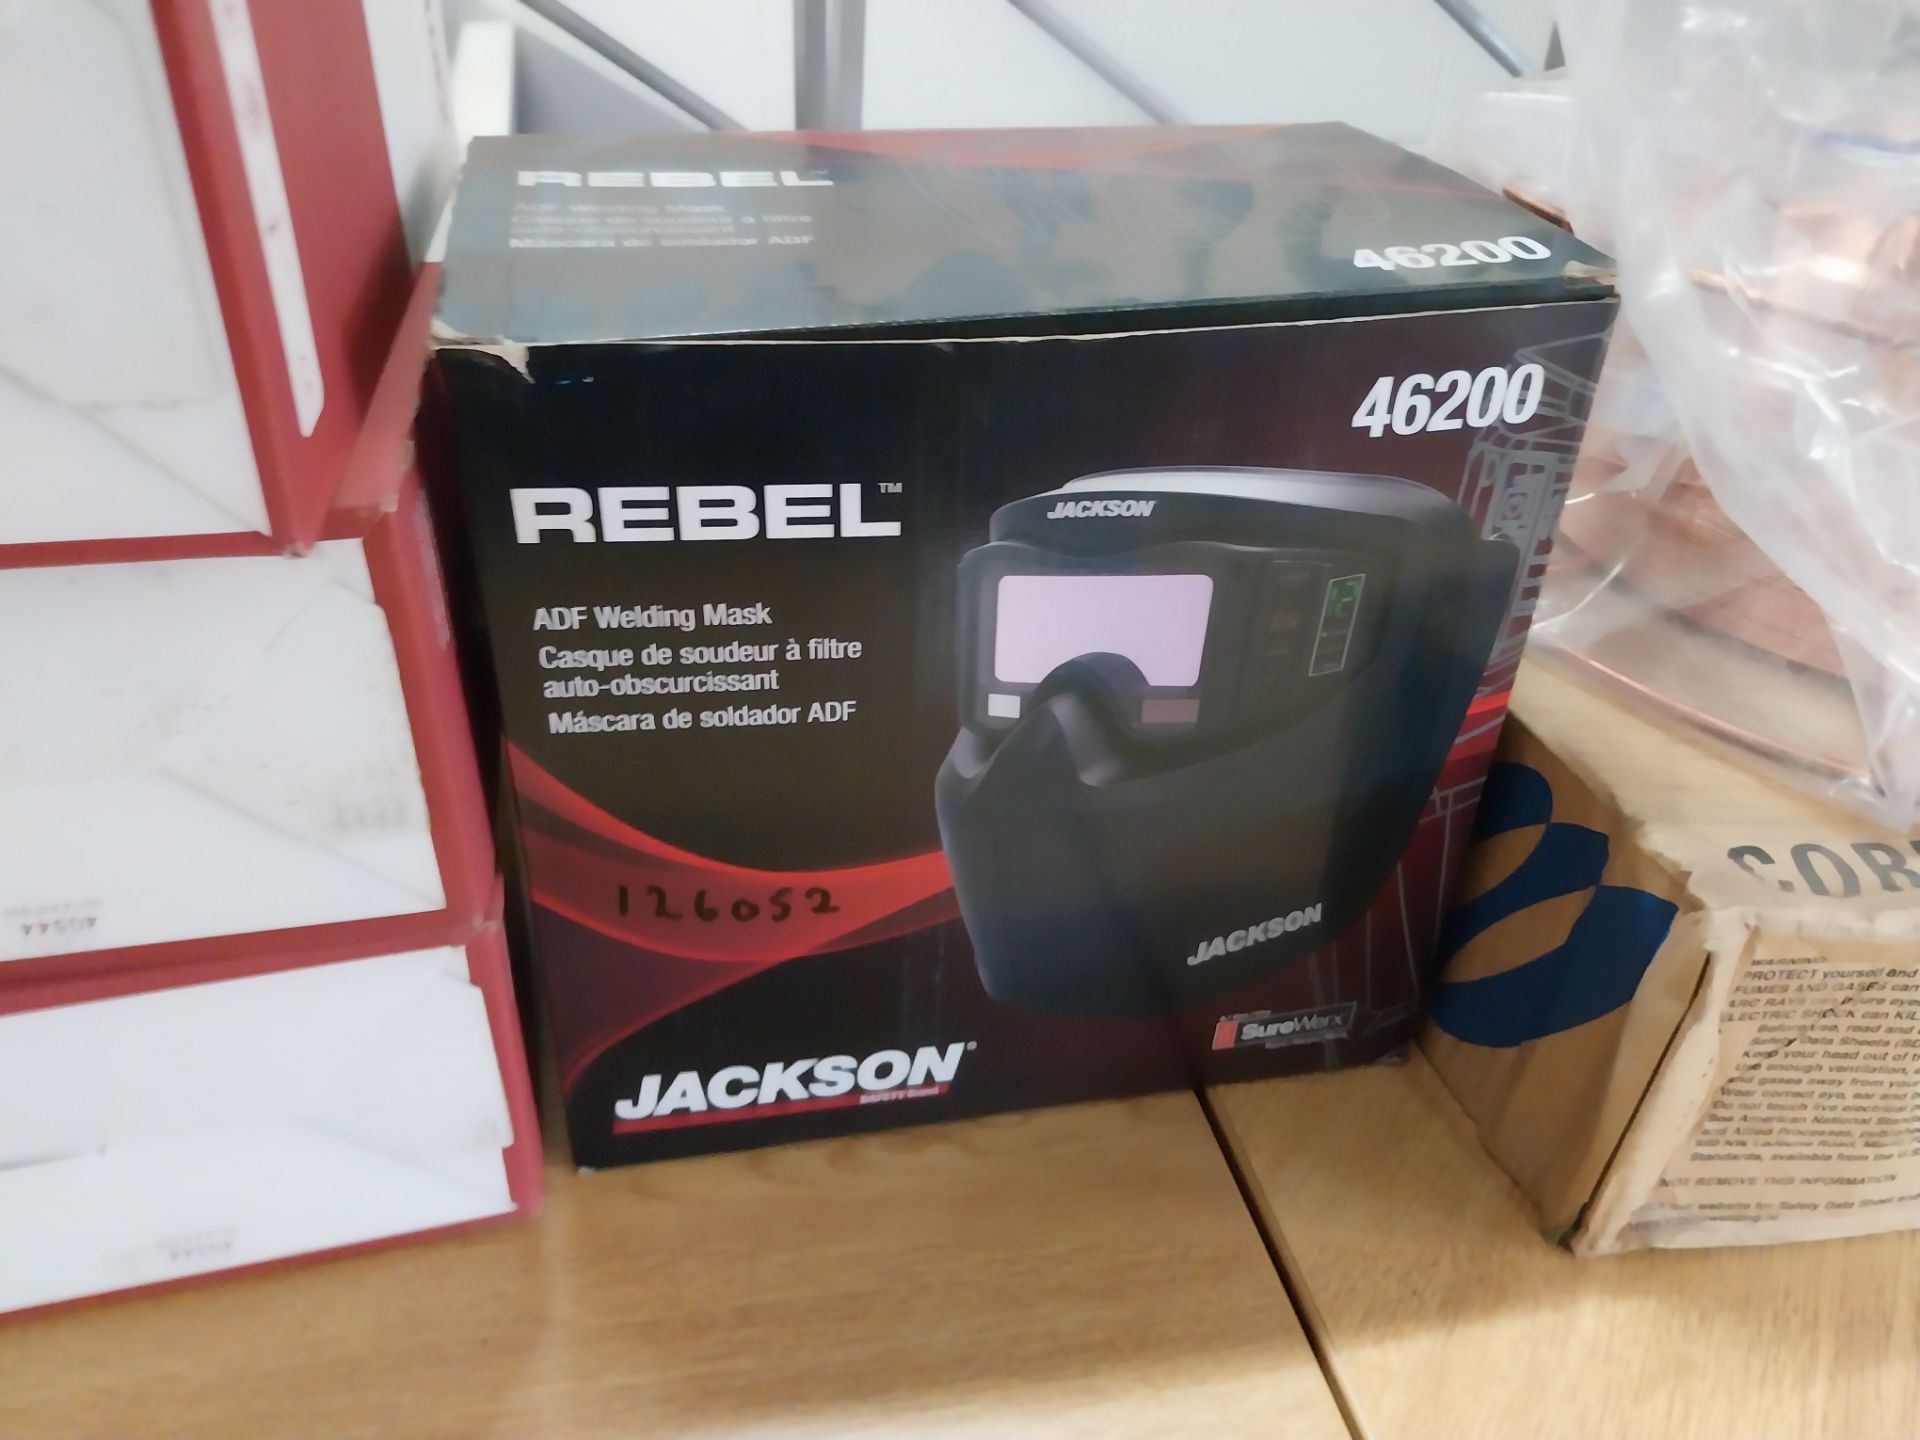 Welding equipment to include Jackson rebel 46200 mask, 2 x Welding reels, 3 x Moldex masks and - Image 2 of 6